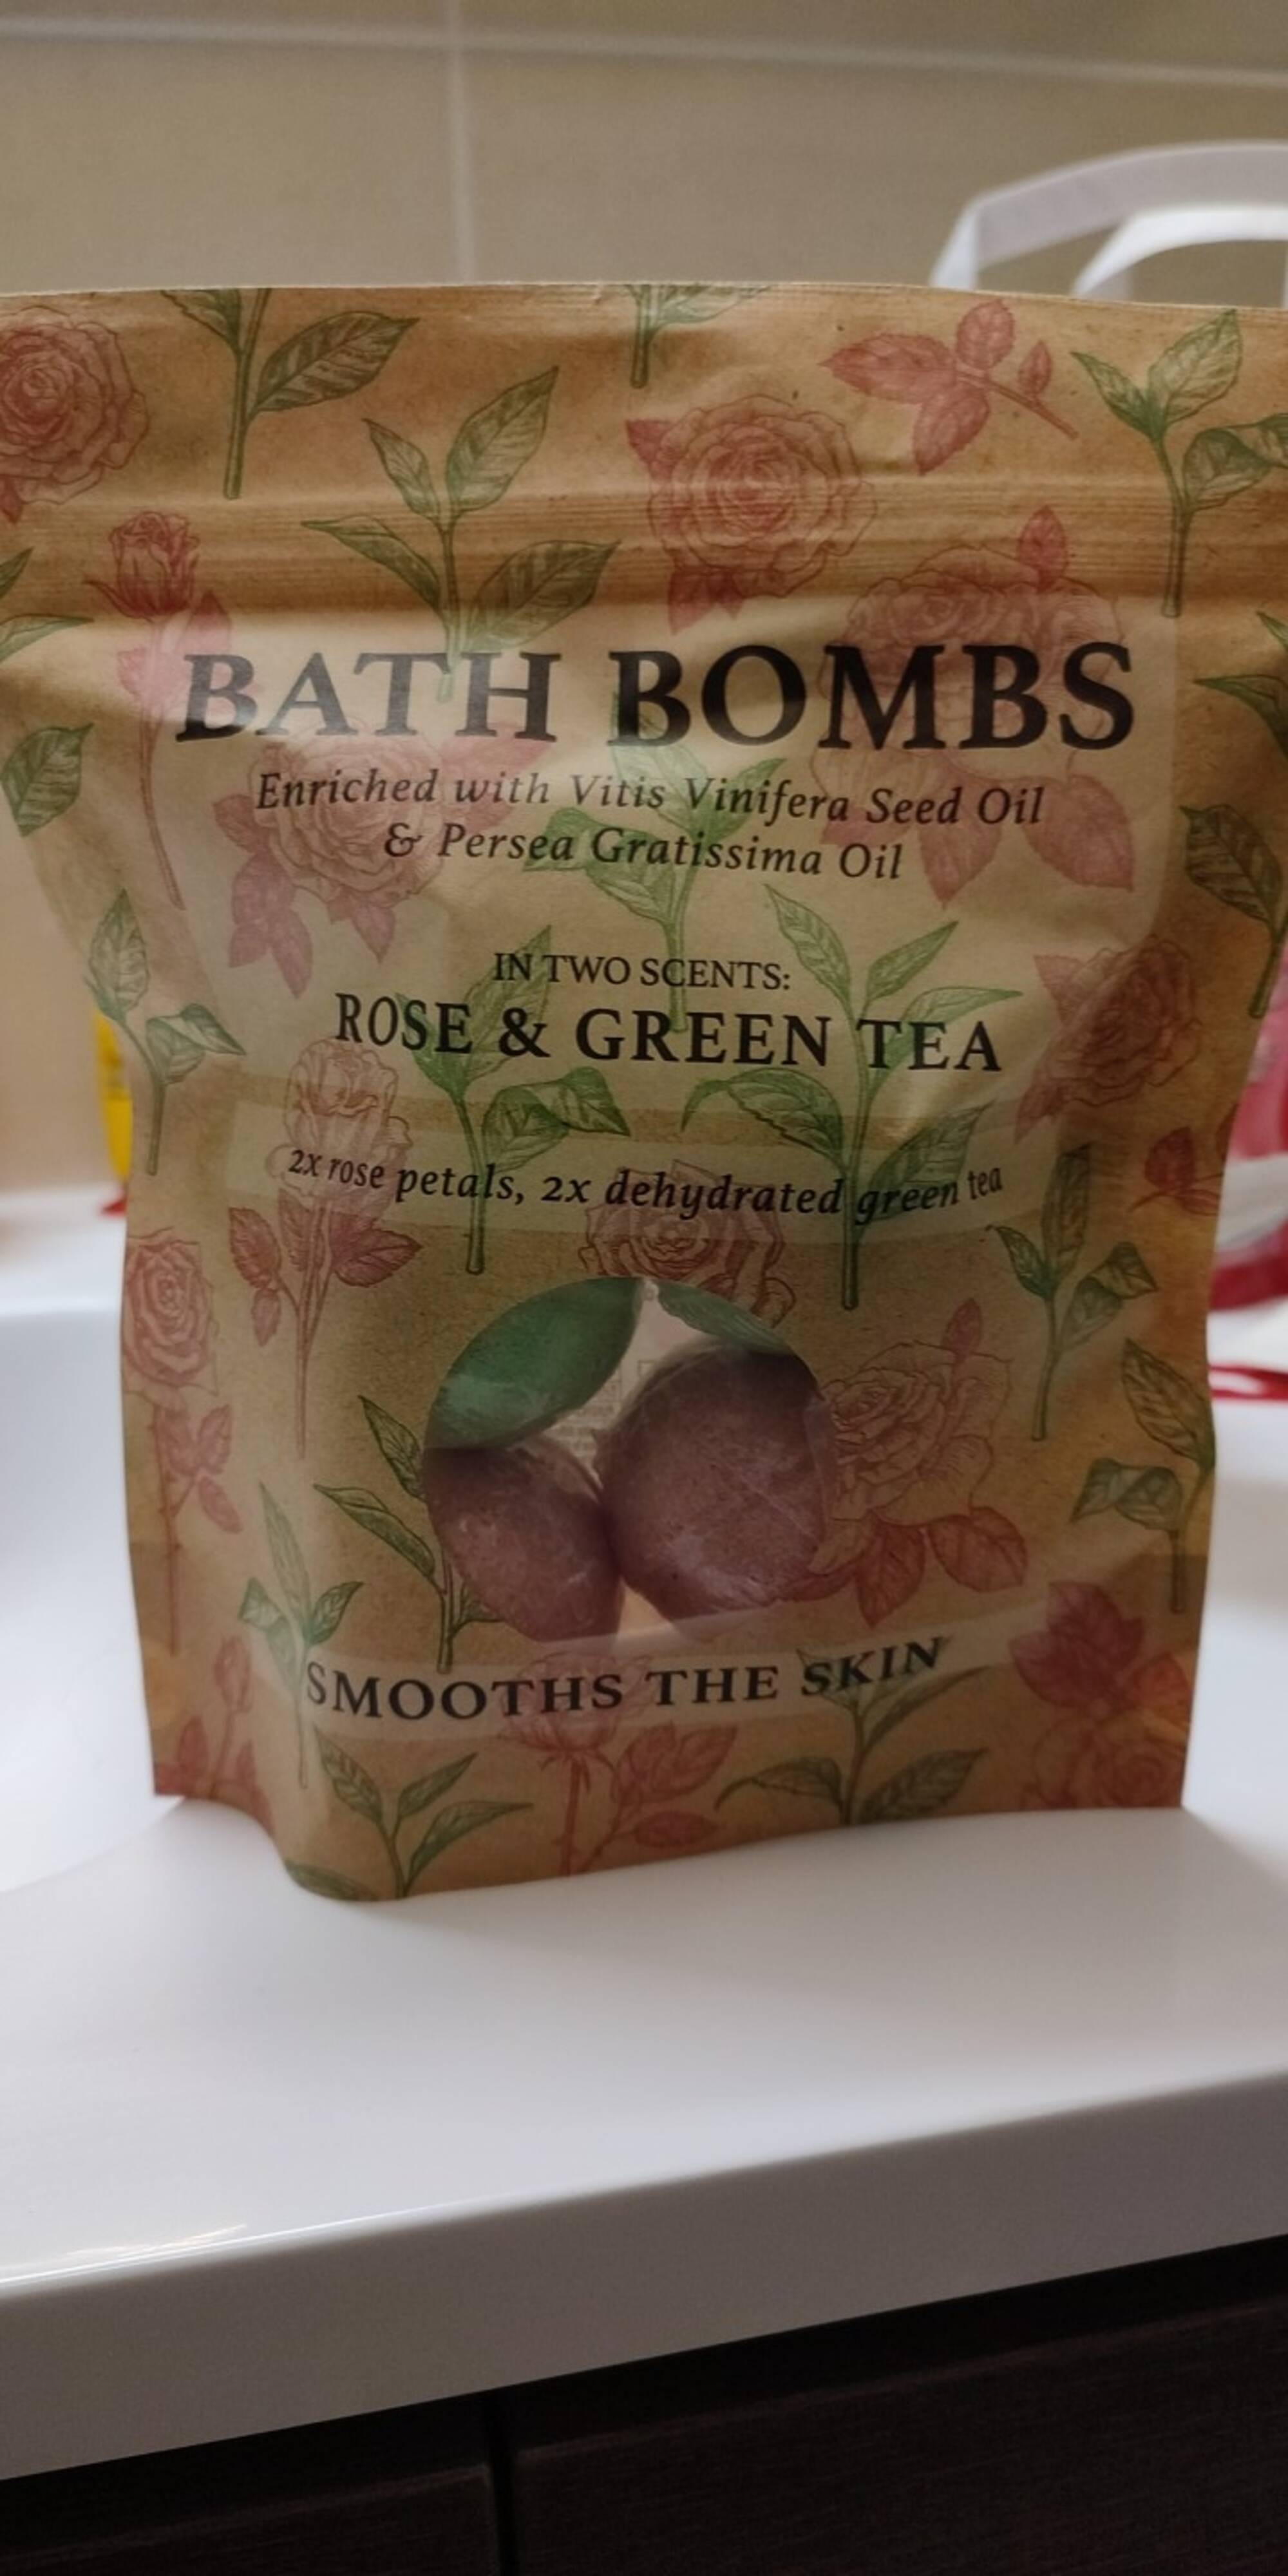 DAYES - Rose & Green tea - Bath bombs